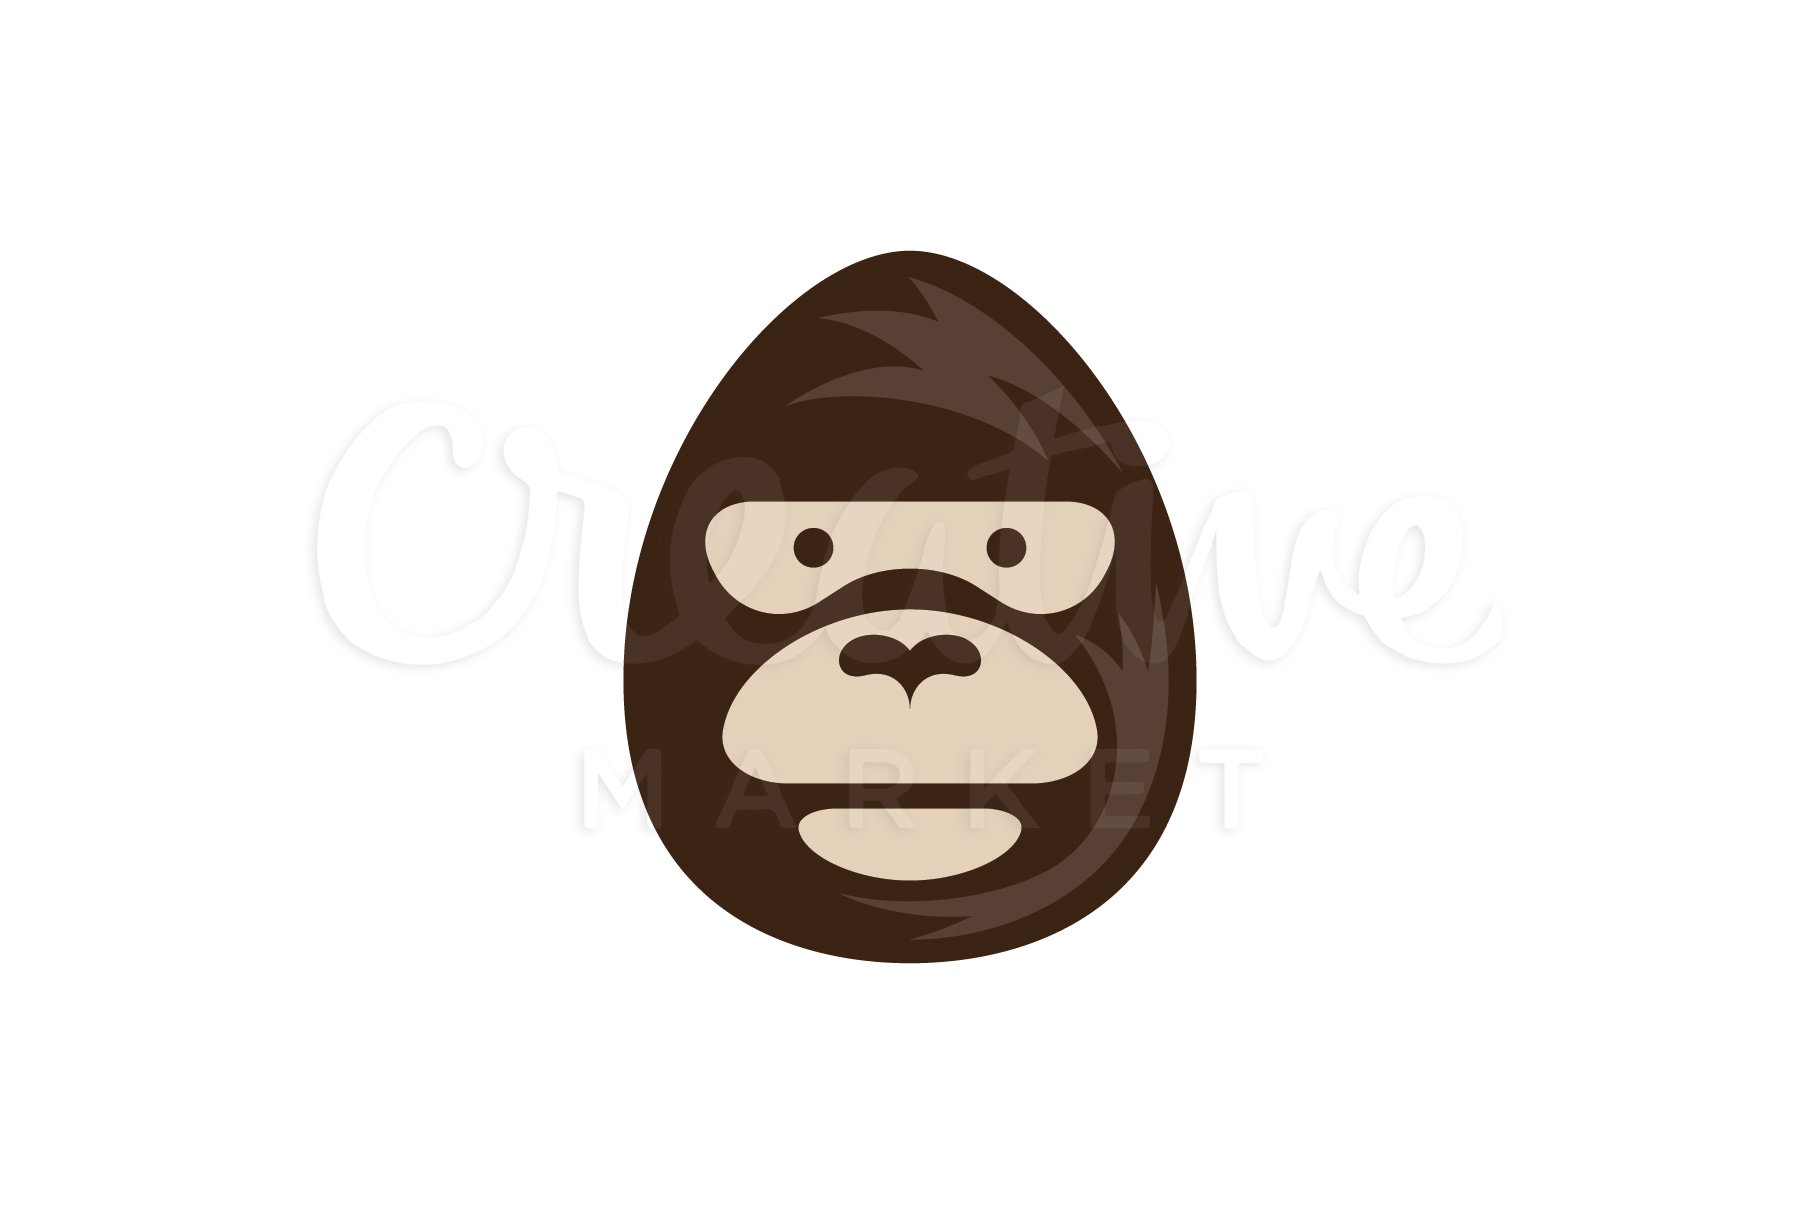 Gorilla Egg Logo cover image.